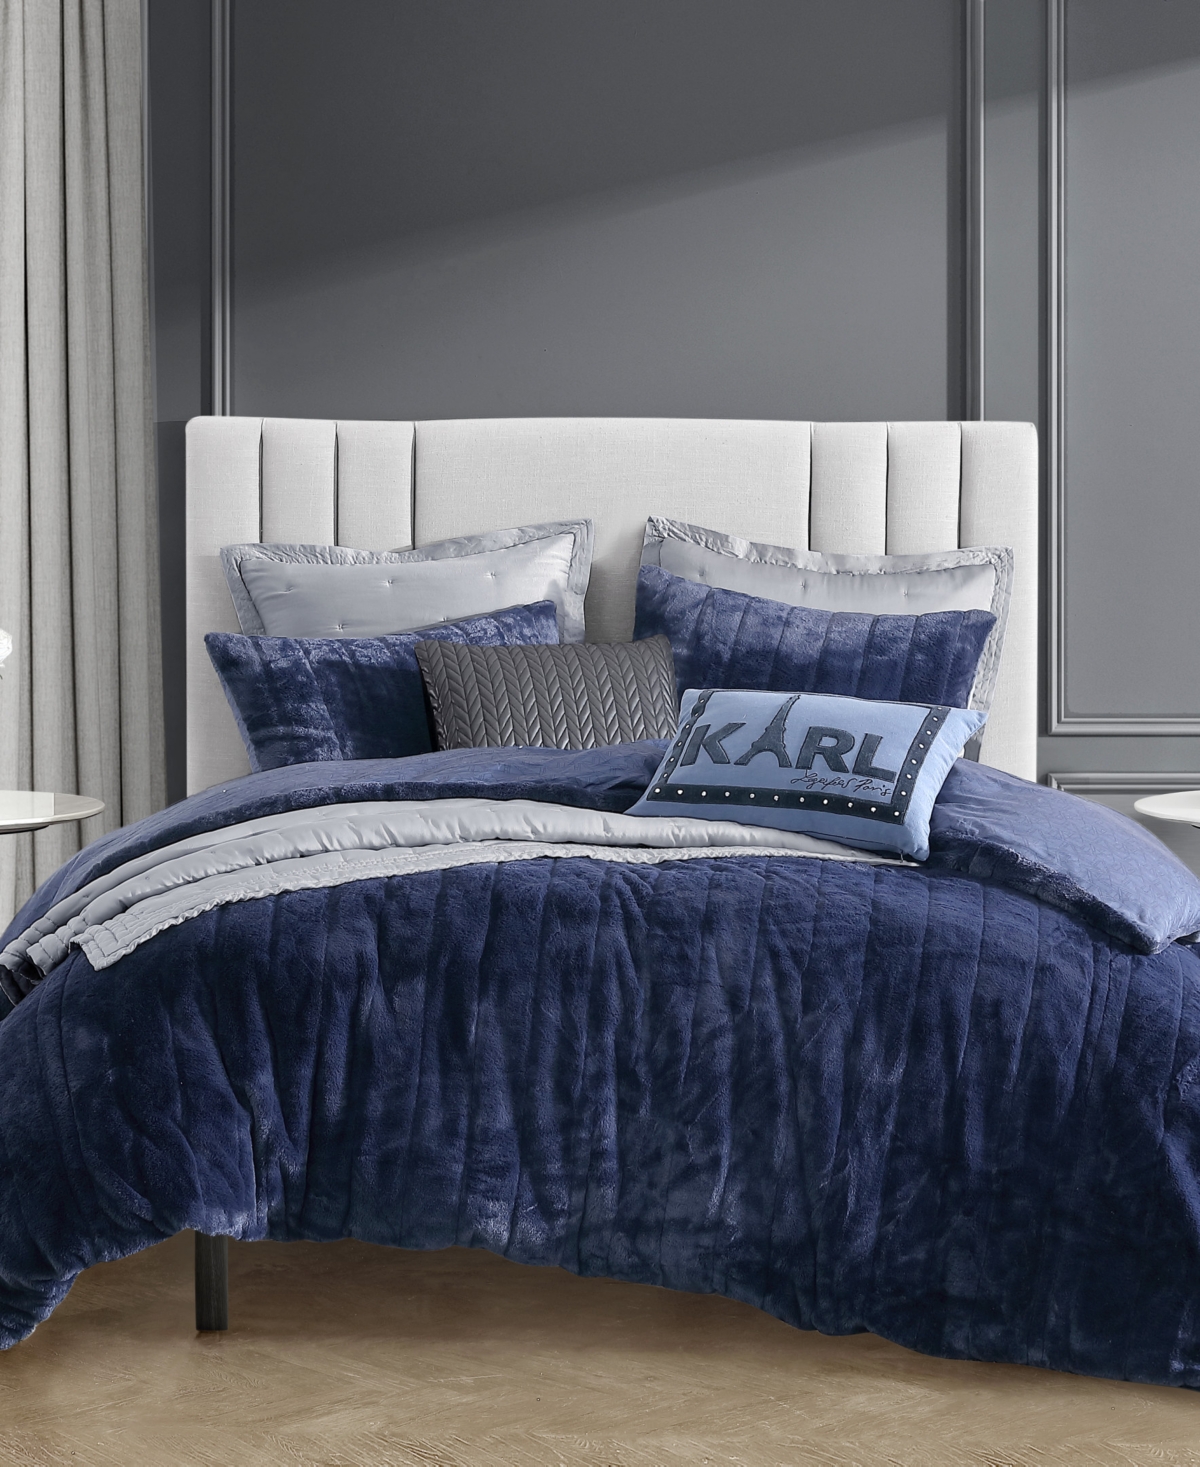 Karl Lagerfeld Soft And Warm Channel 3 Piece Comforter Set, King Bedding In Indigo